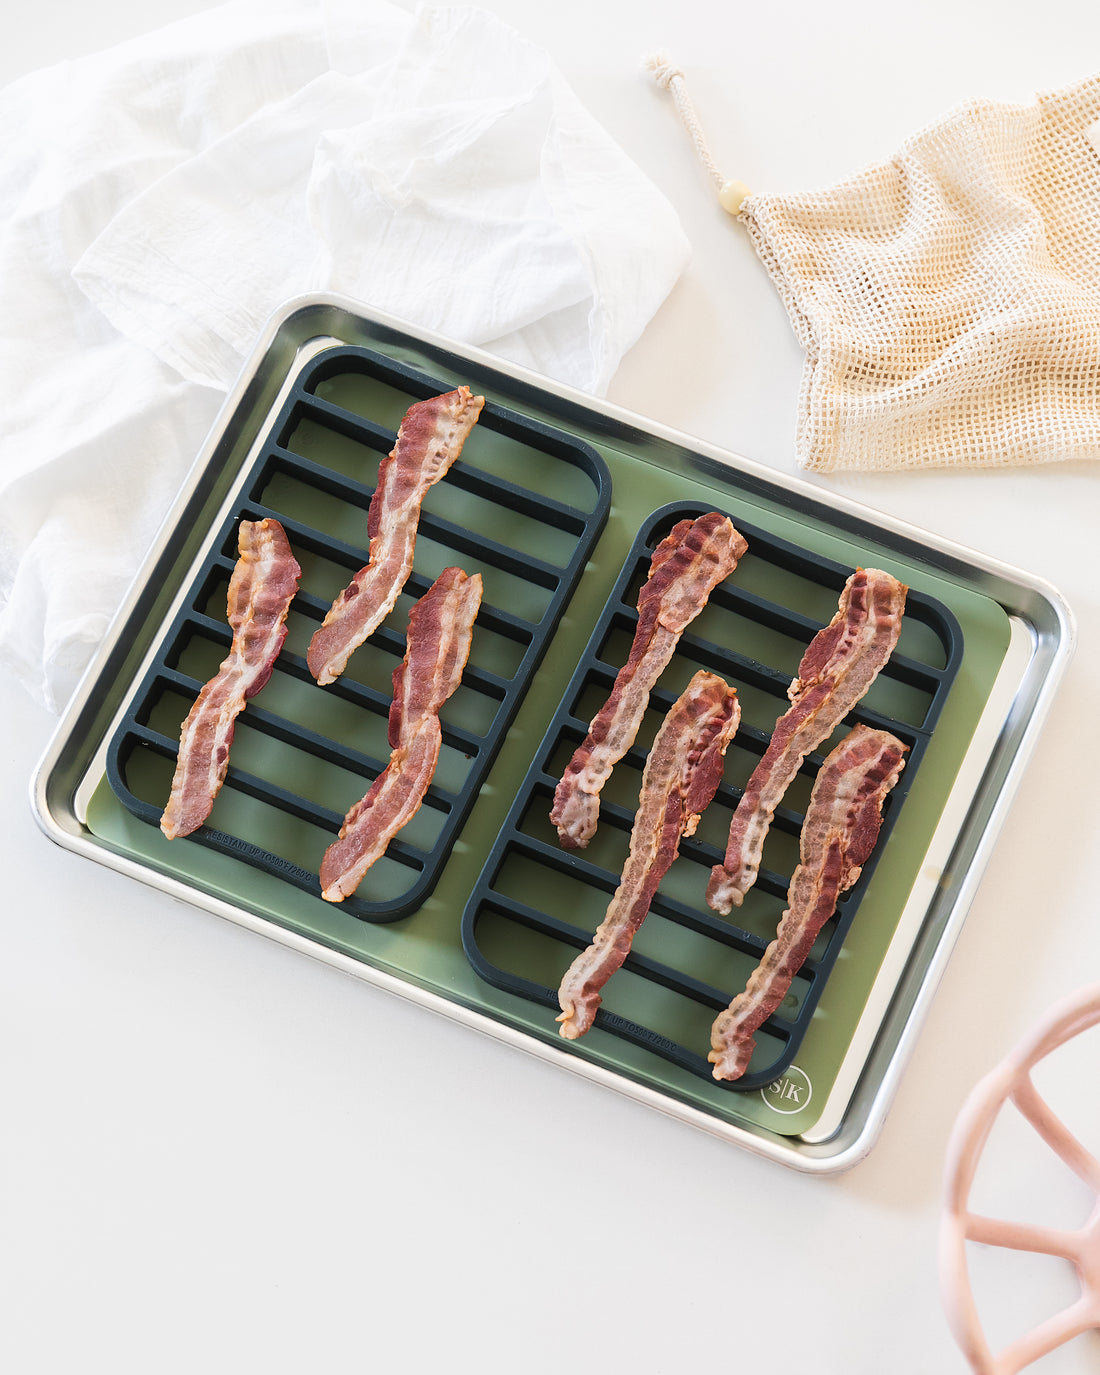 Bacon on silicone baking sheet and silicone roasting racks